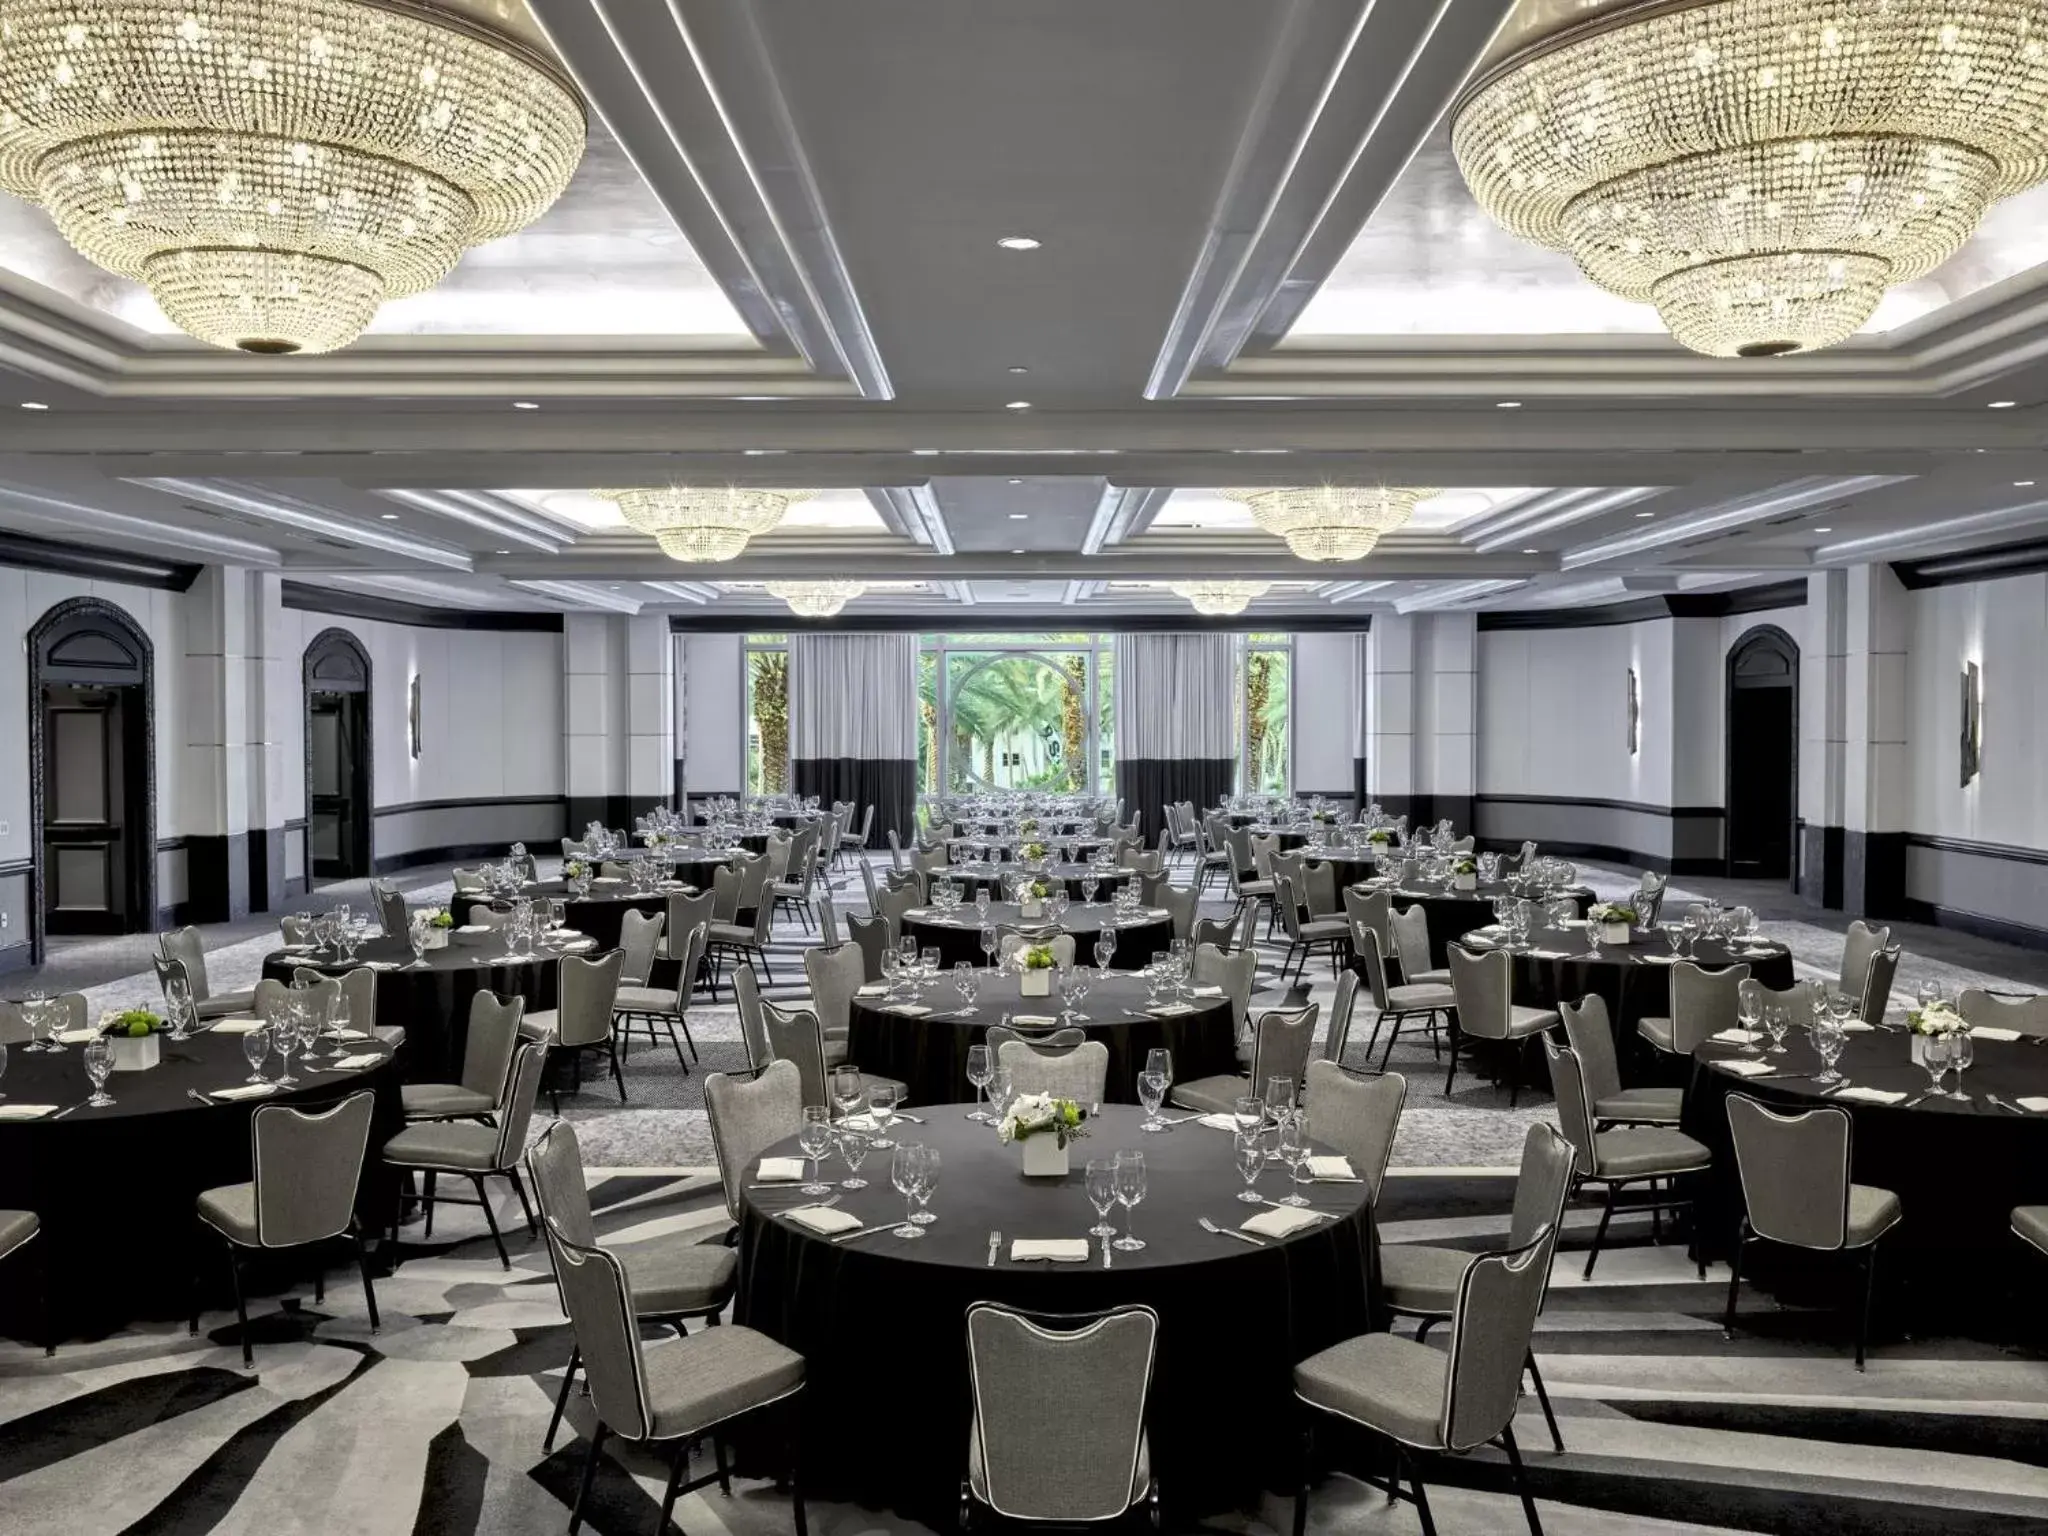 Banquet/Function facilities, Banquet Facilities in Loews Miami Beach Hotel